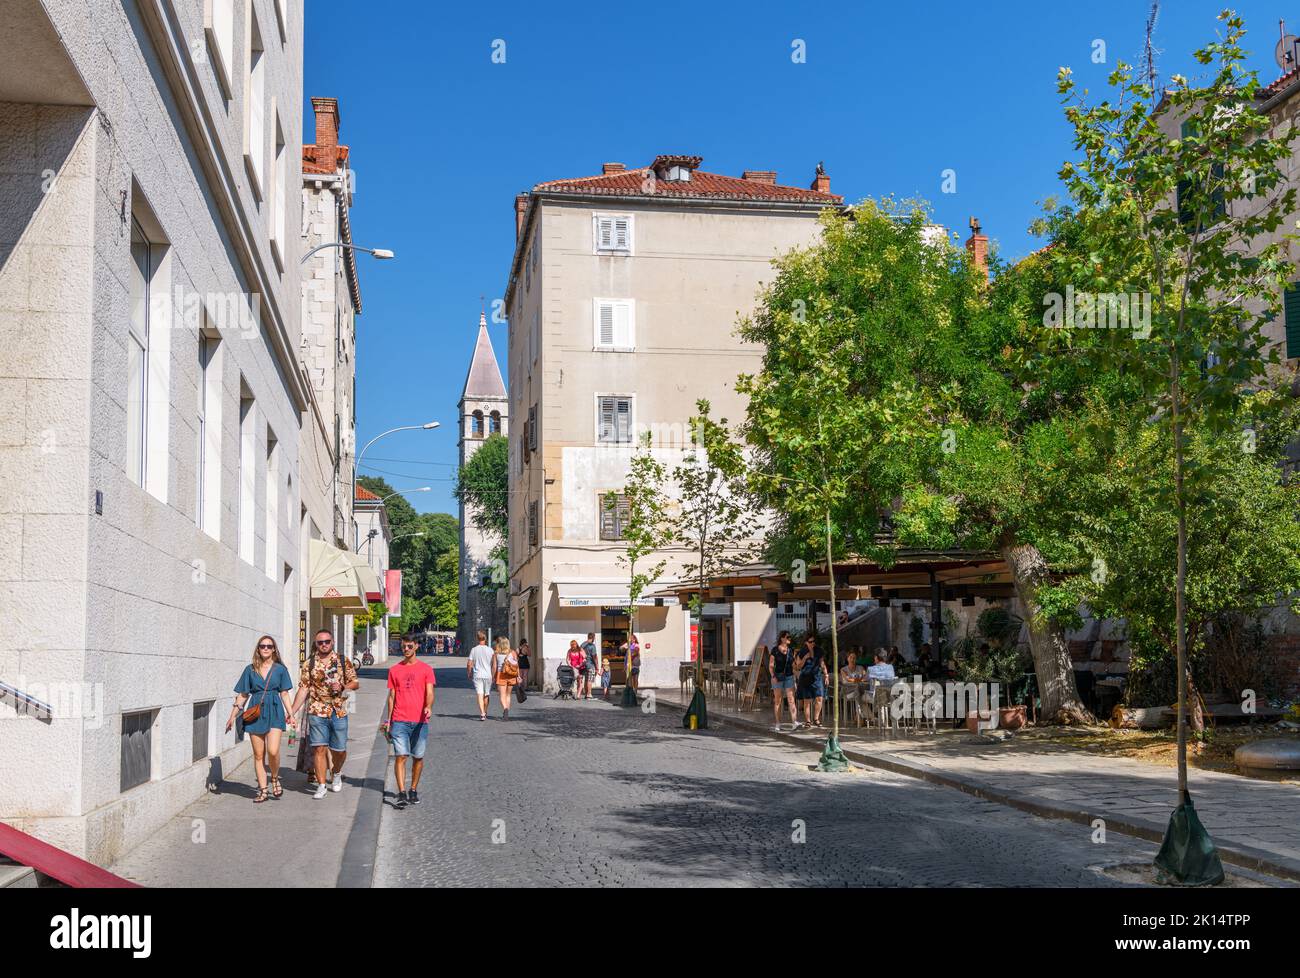 Ulica Kralja Tomislava, as street in the old town of Split, Croatia Stock Photo